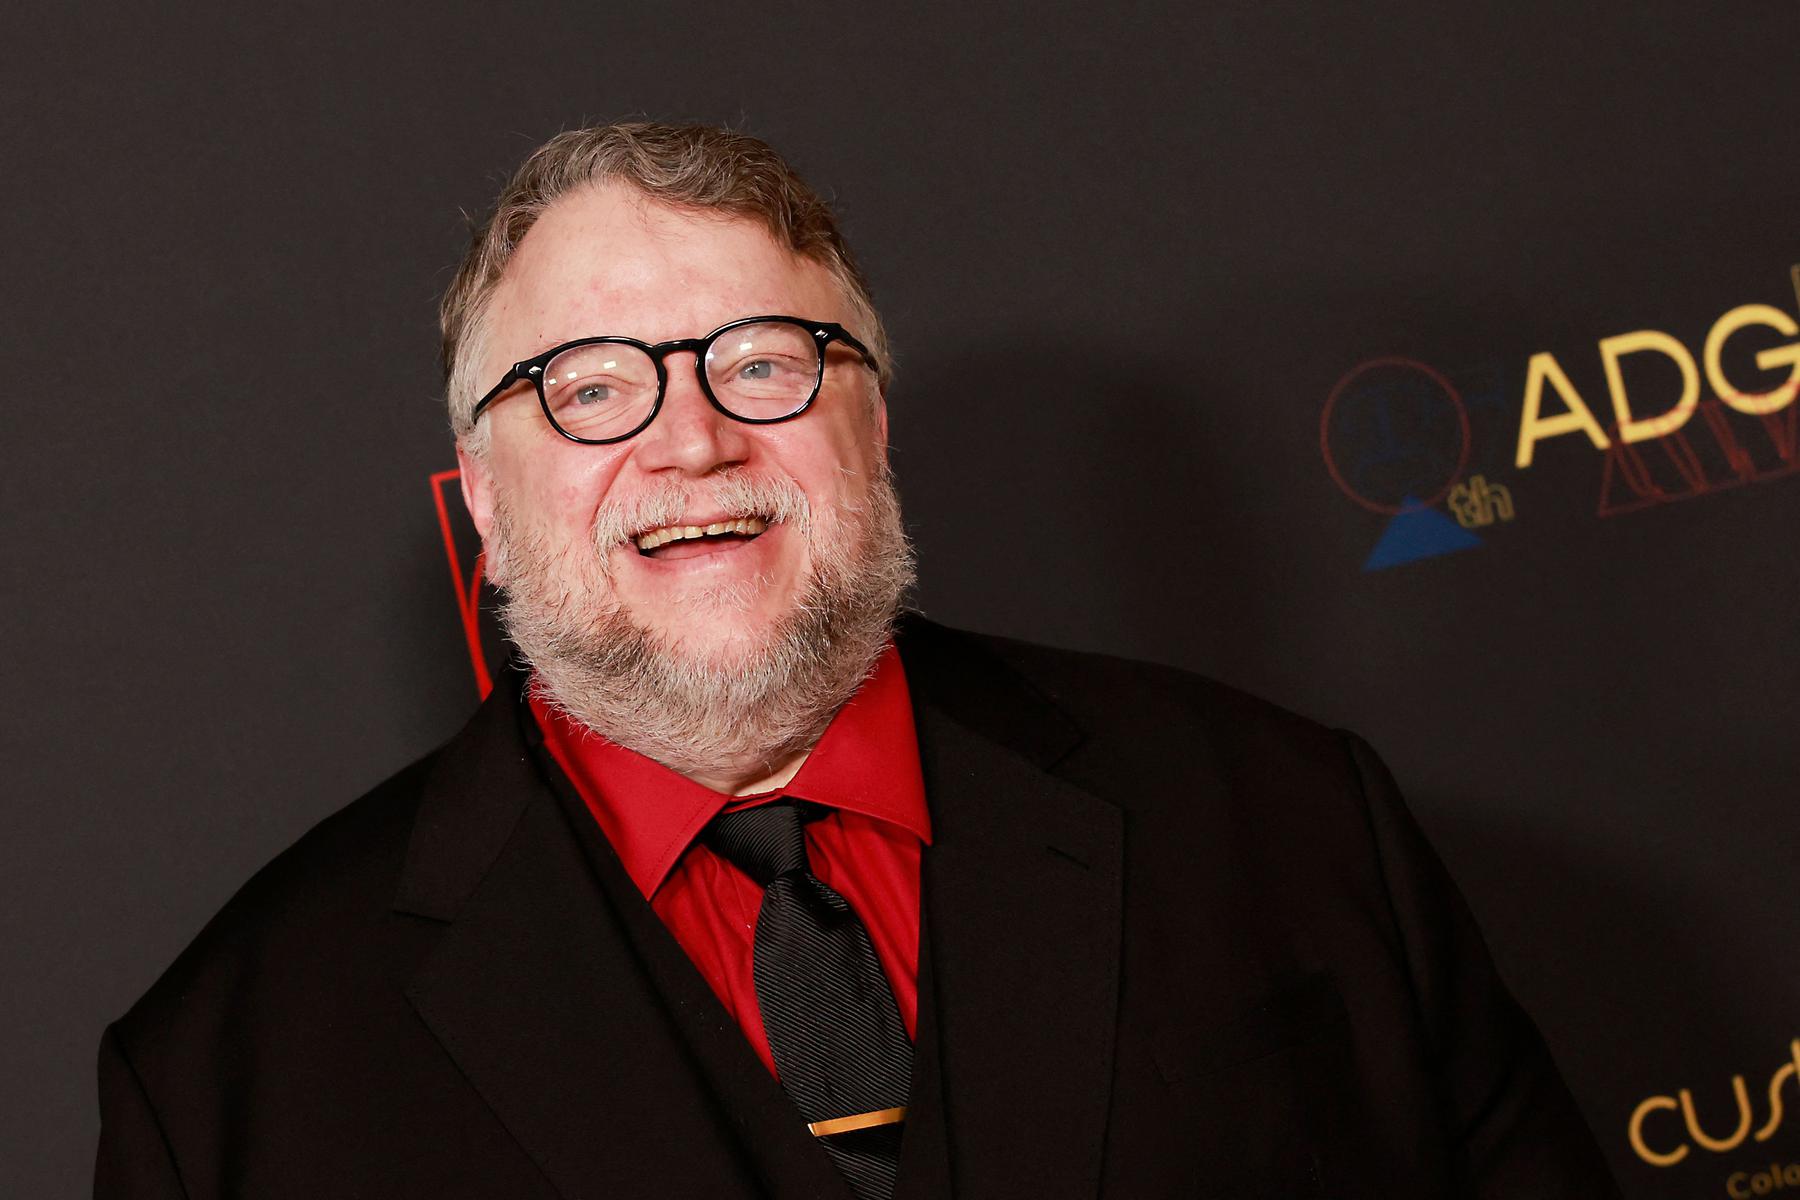 Guillermo Del Toro expressa insatisfação com Hollywood - Michael Tran/AFP